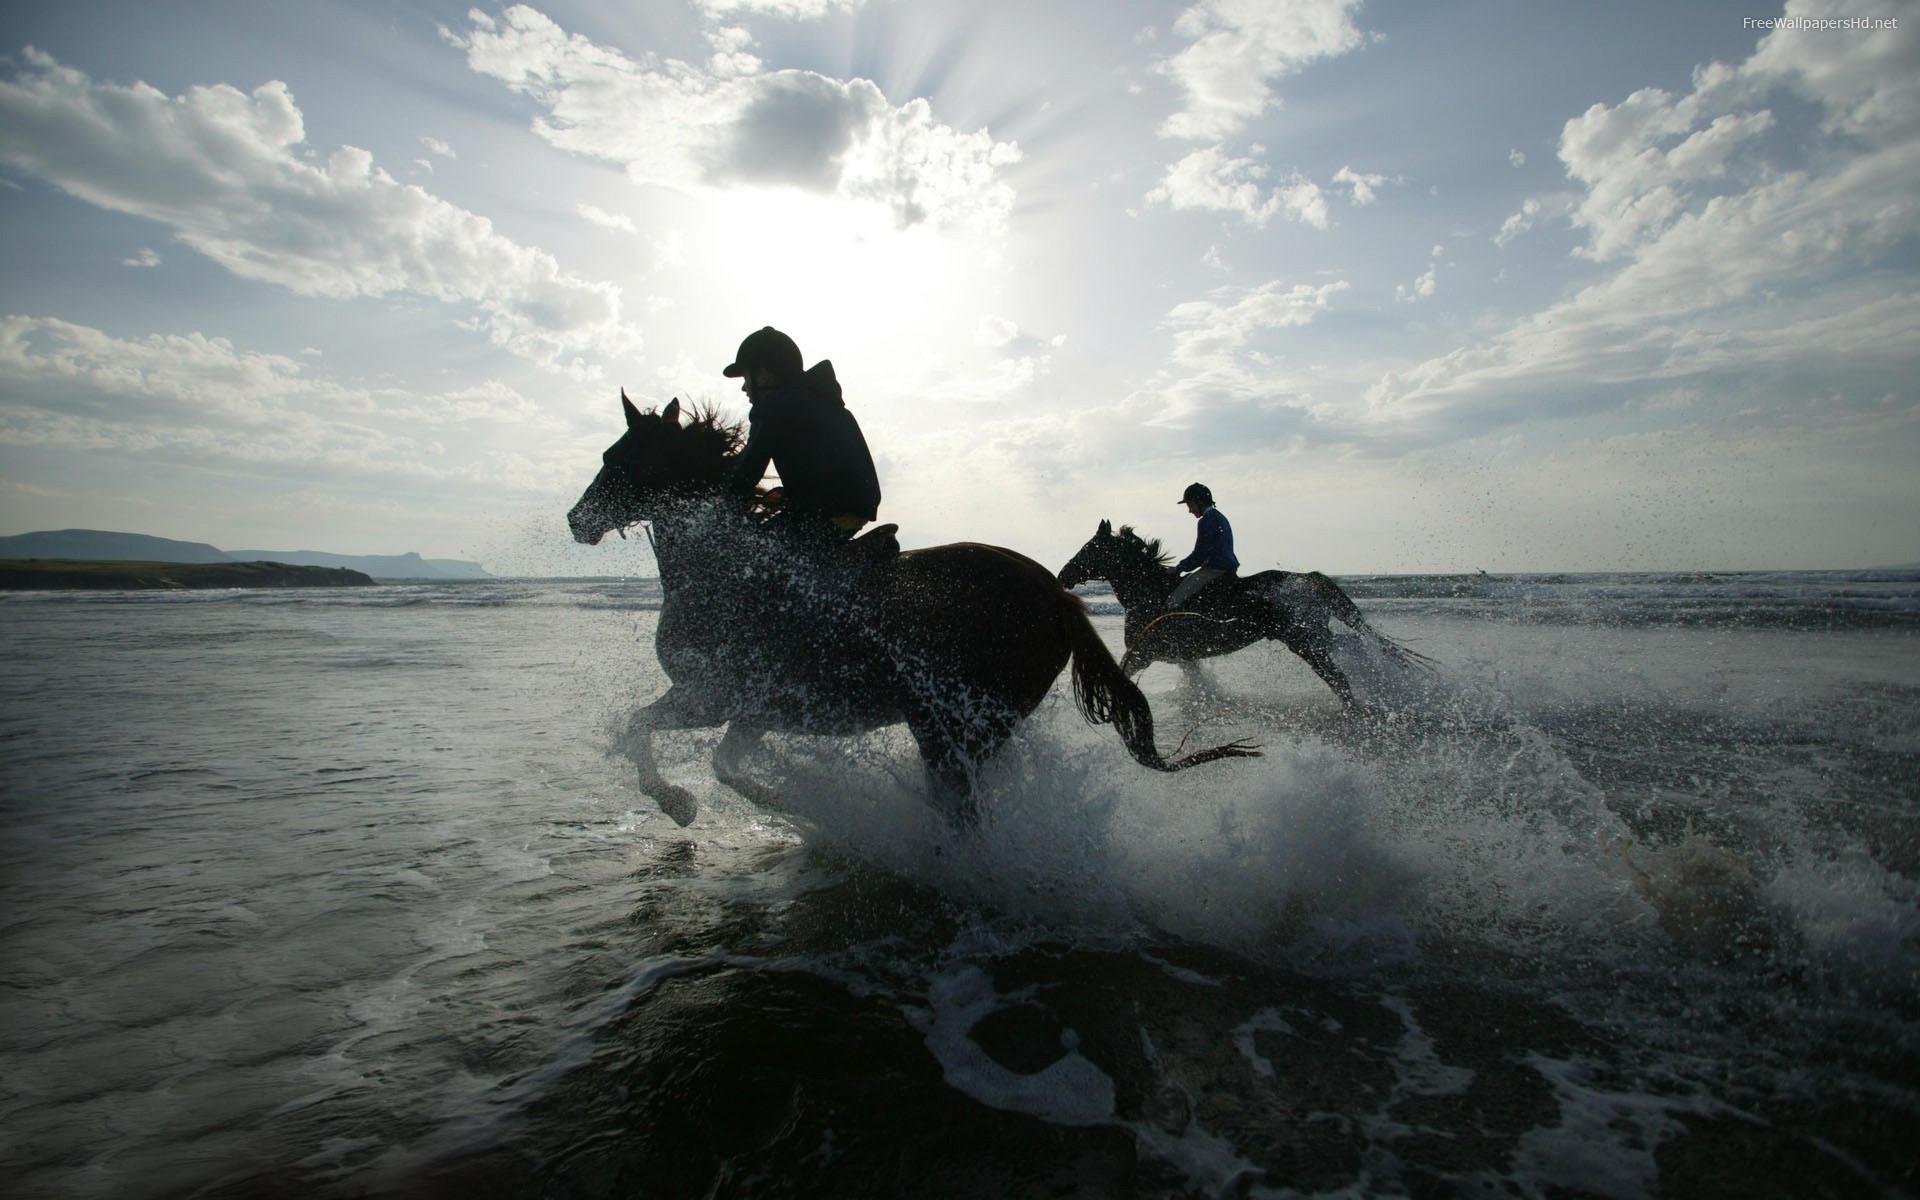 [46+] Horses on the Beach Wallpaper | WallpaperSafari.com